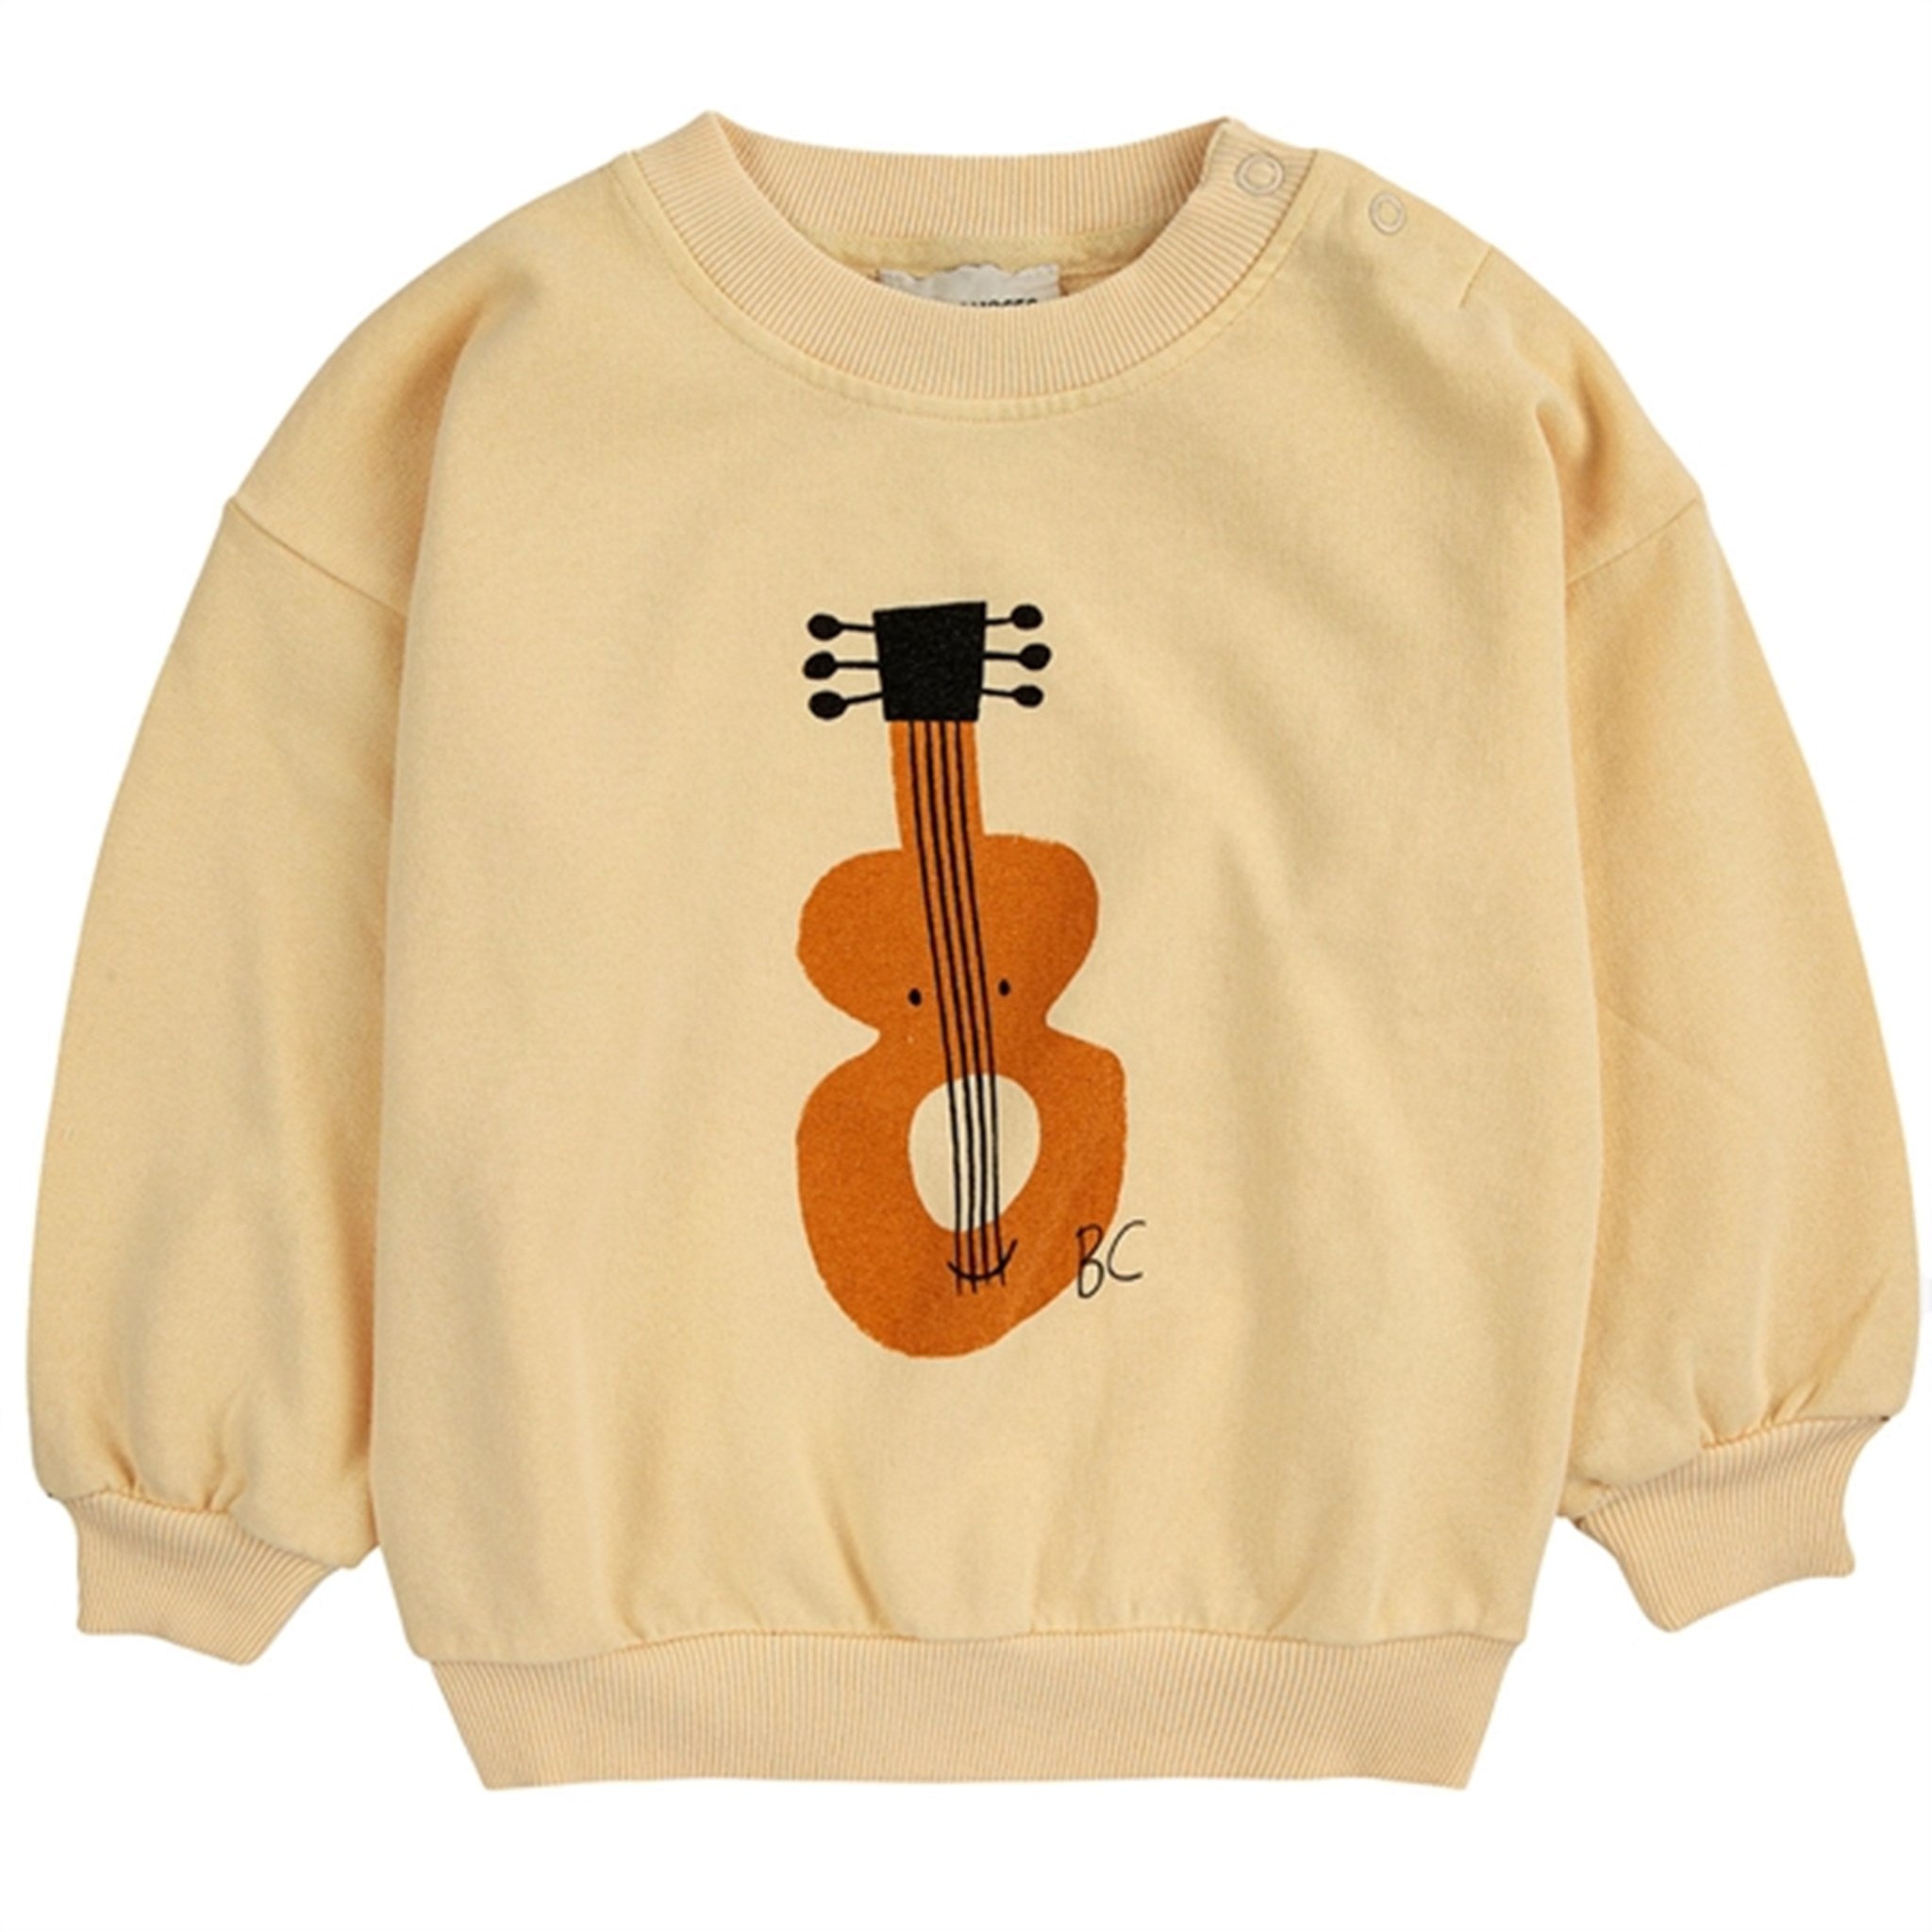 Bobo Choses Bebis Acoustic Guitar Sweatshirt Round Neck Light Yellow